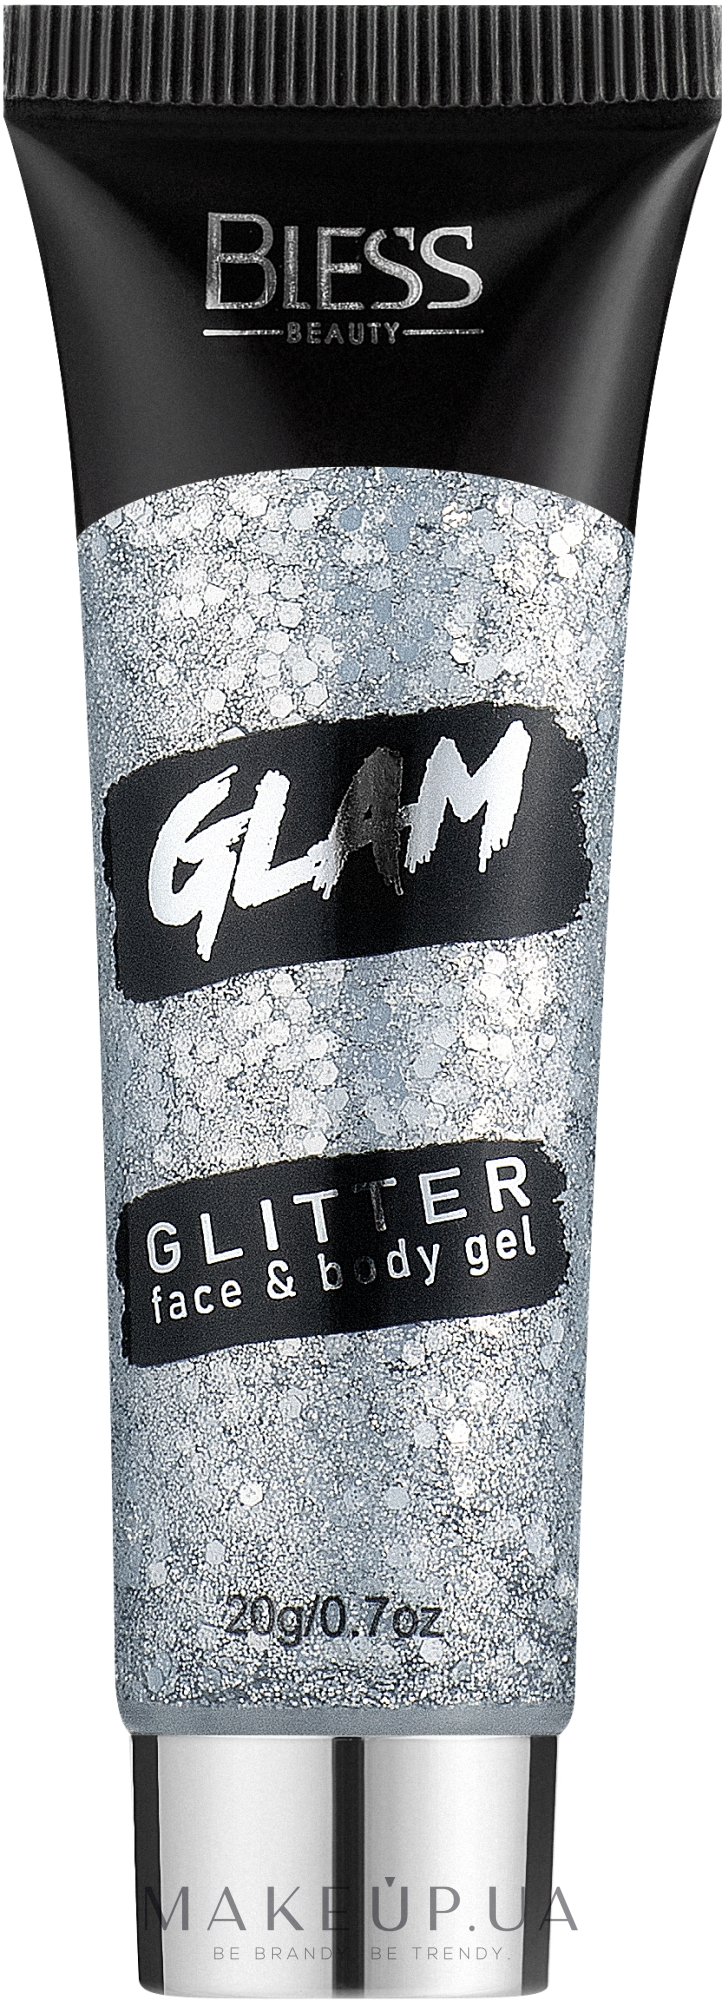 Глиттер для лица и тела - Bless Beauty Glam Glitter Face & Body Gel — фото 03